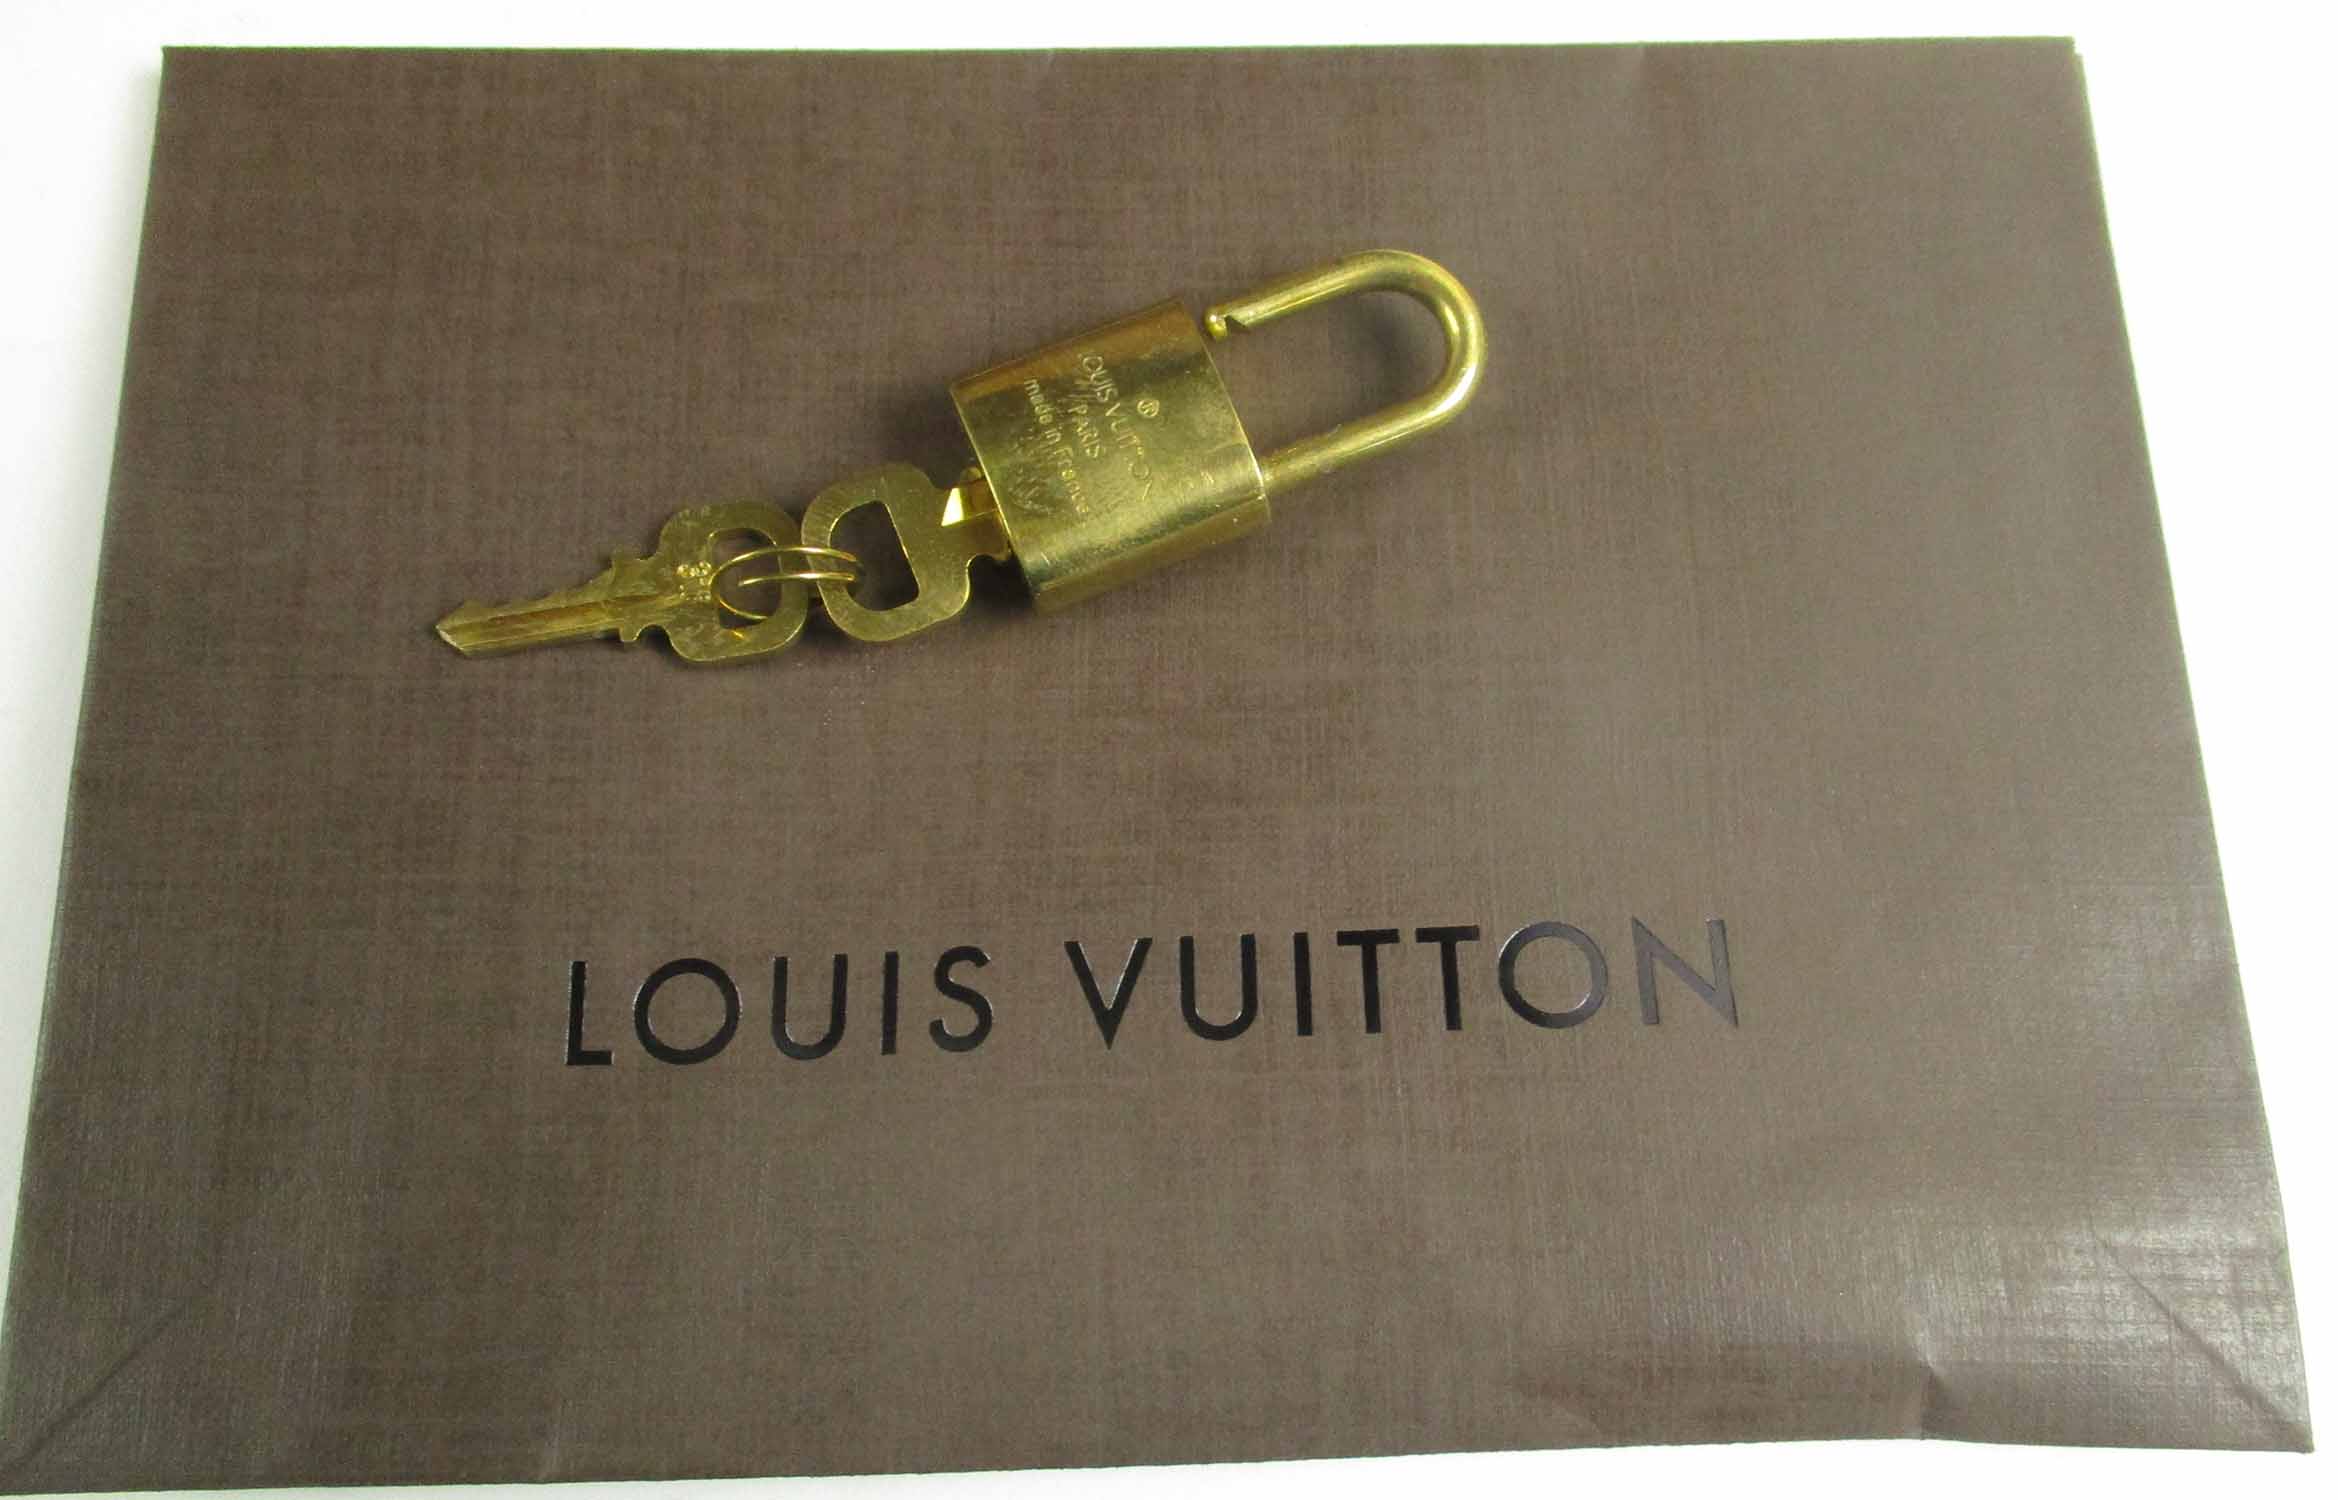 Sold at Auction: LOUIS VUITTON LOCK & KEY SET